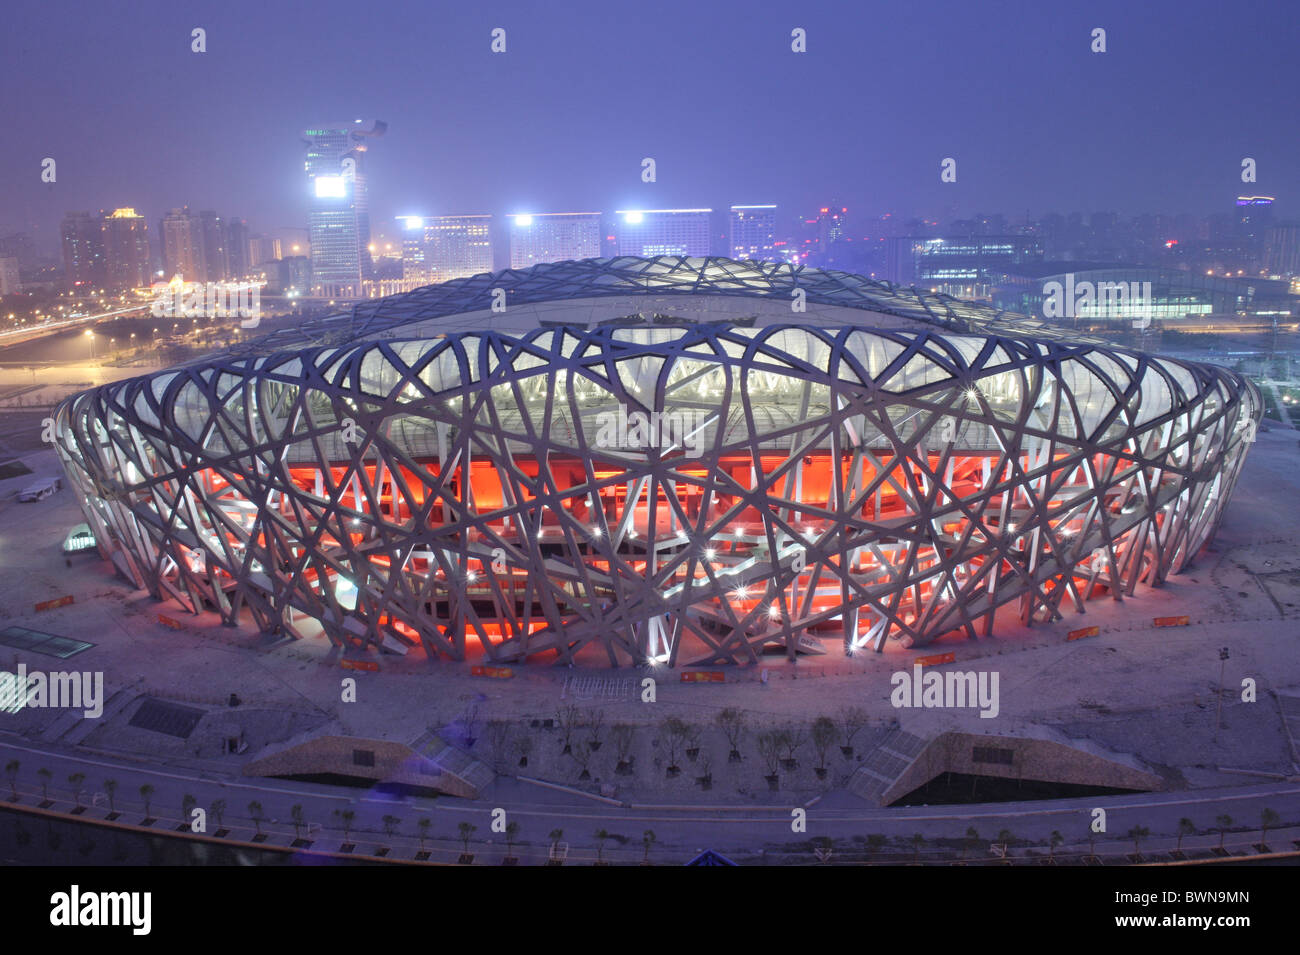 China Asien Beijing Peking April 2008 Nationalstadion 2008 Olympischen Sommerspiele Vogel nest Herzog und de Meuron Bogen Stockfoto